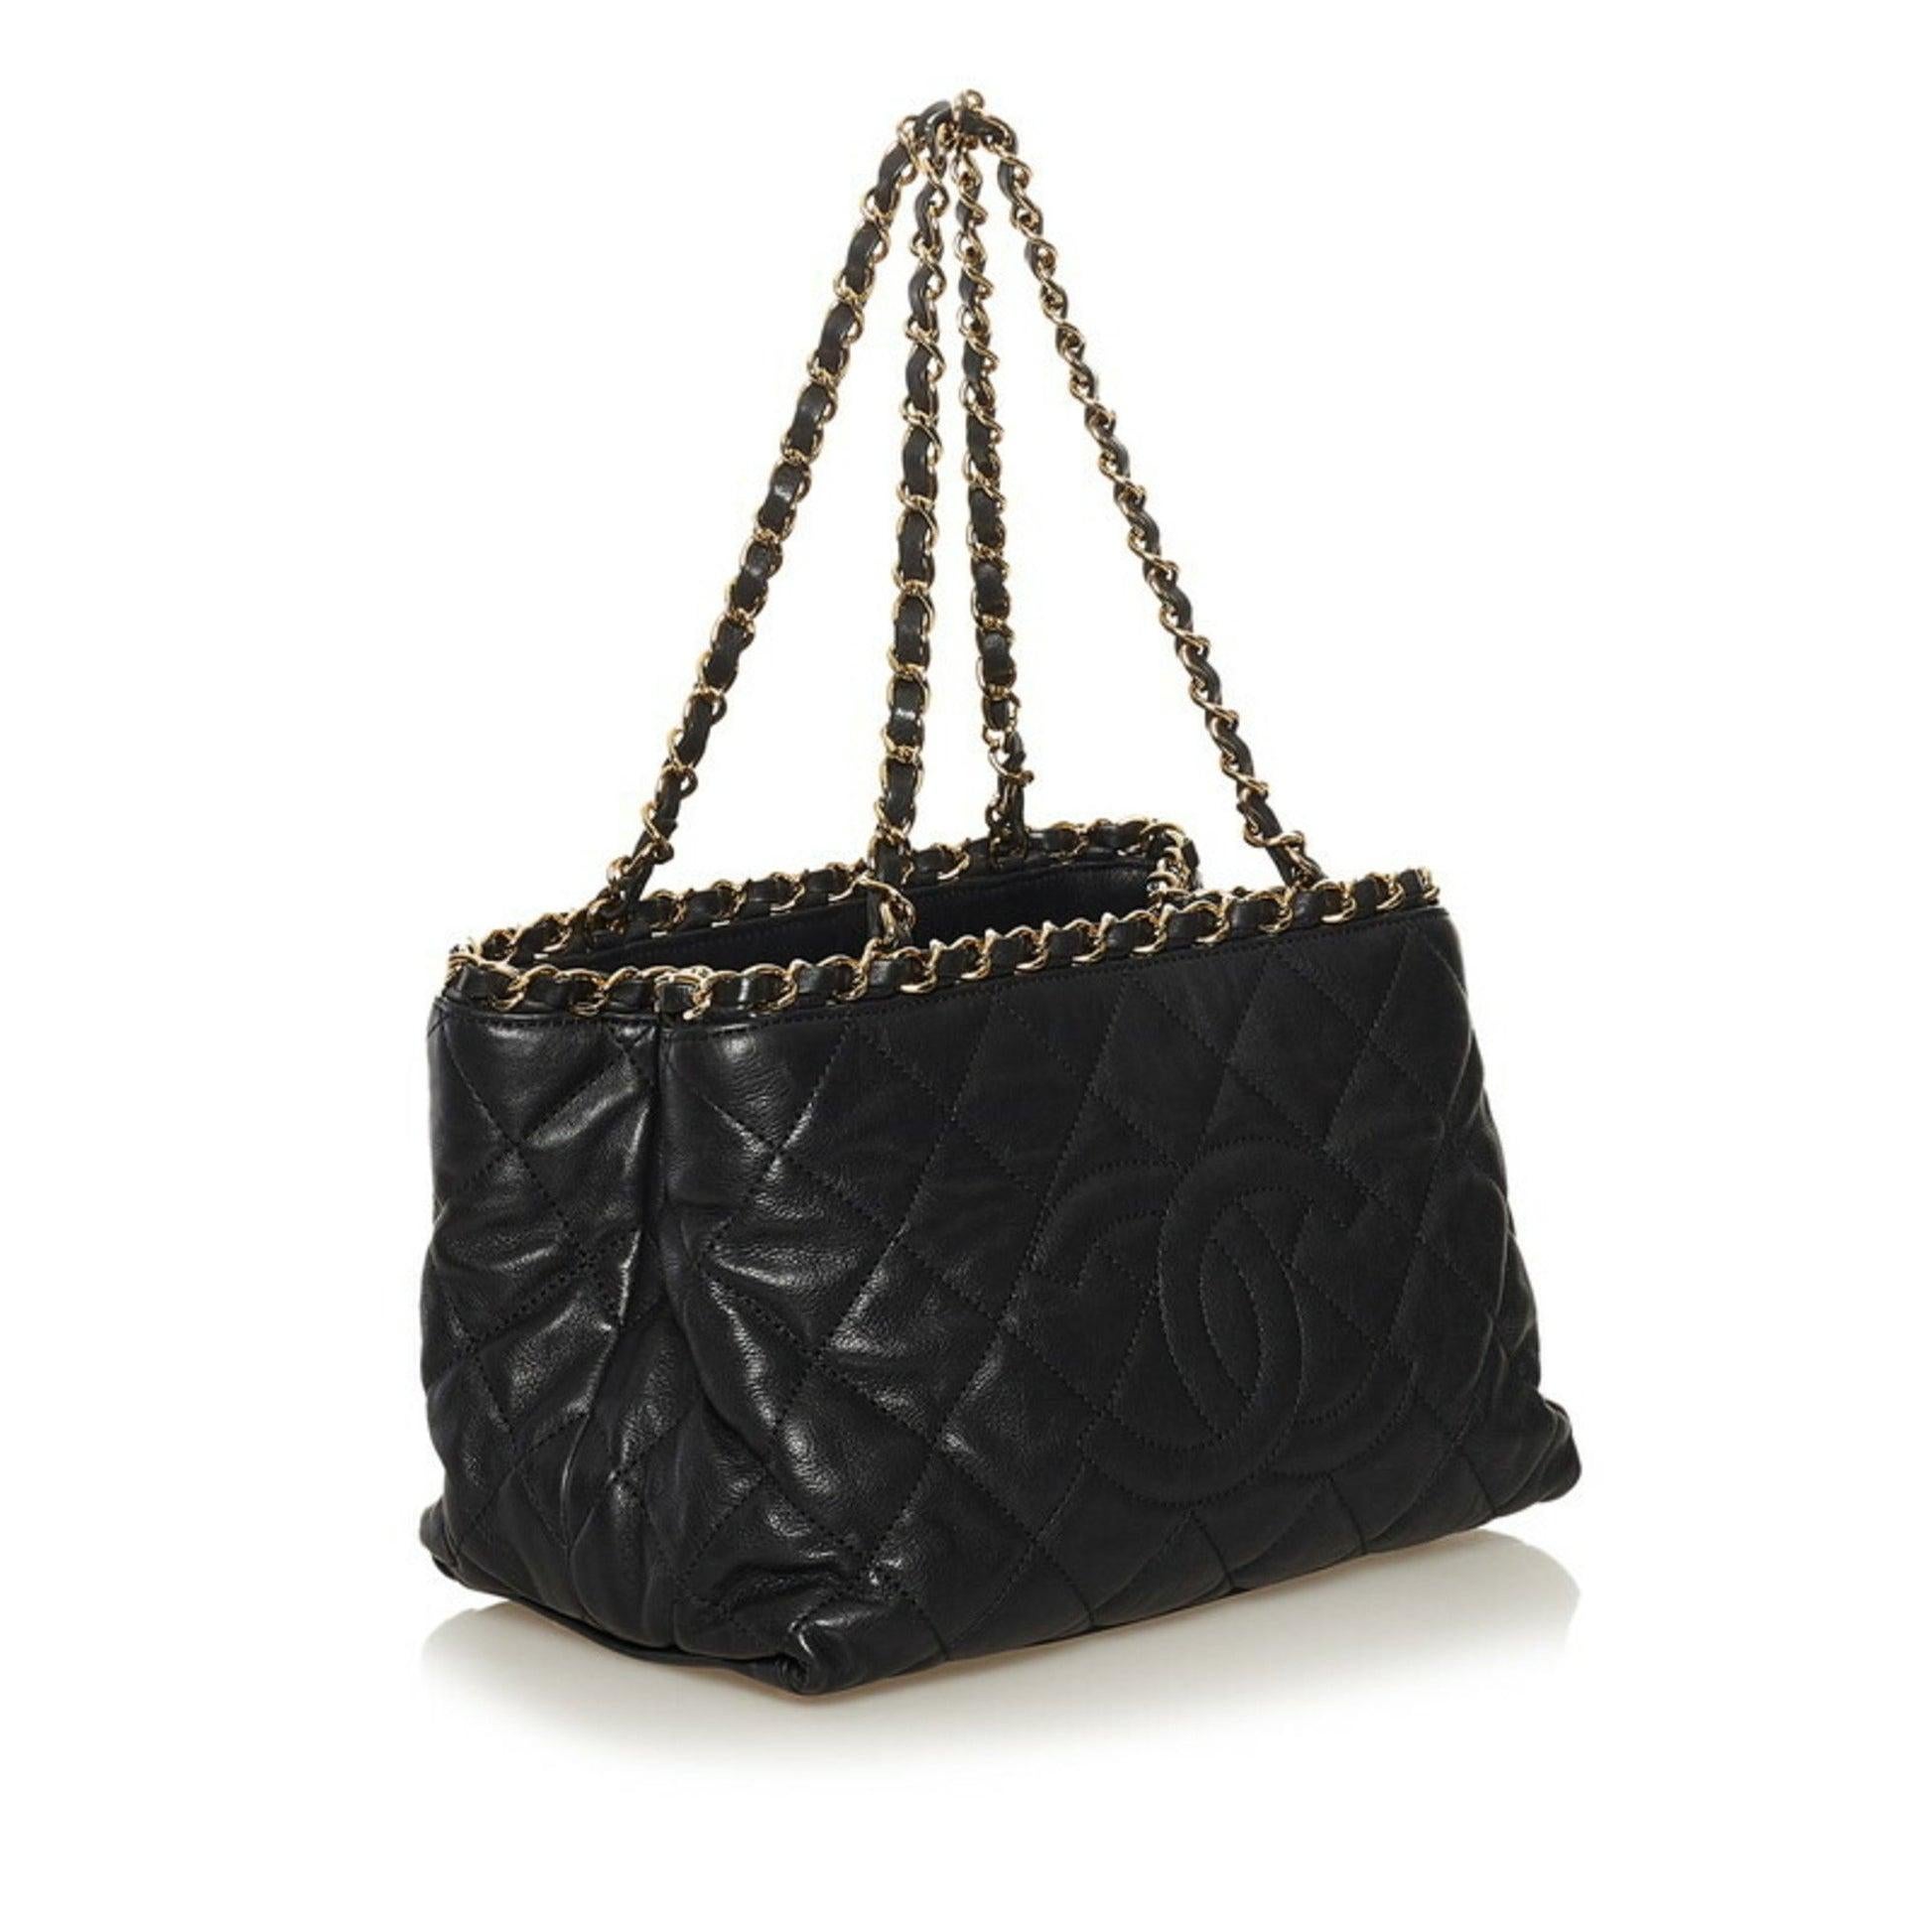 black bag with gold hardware